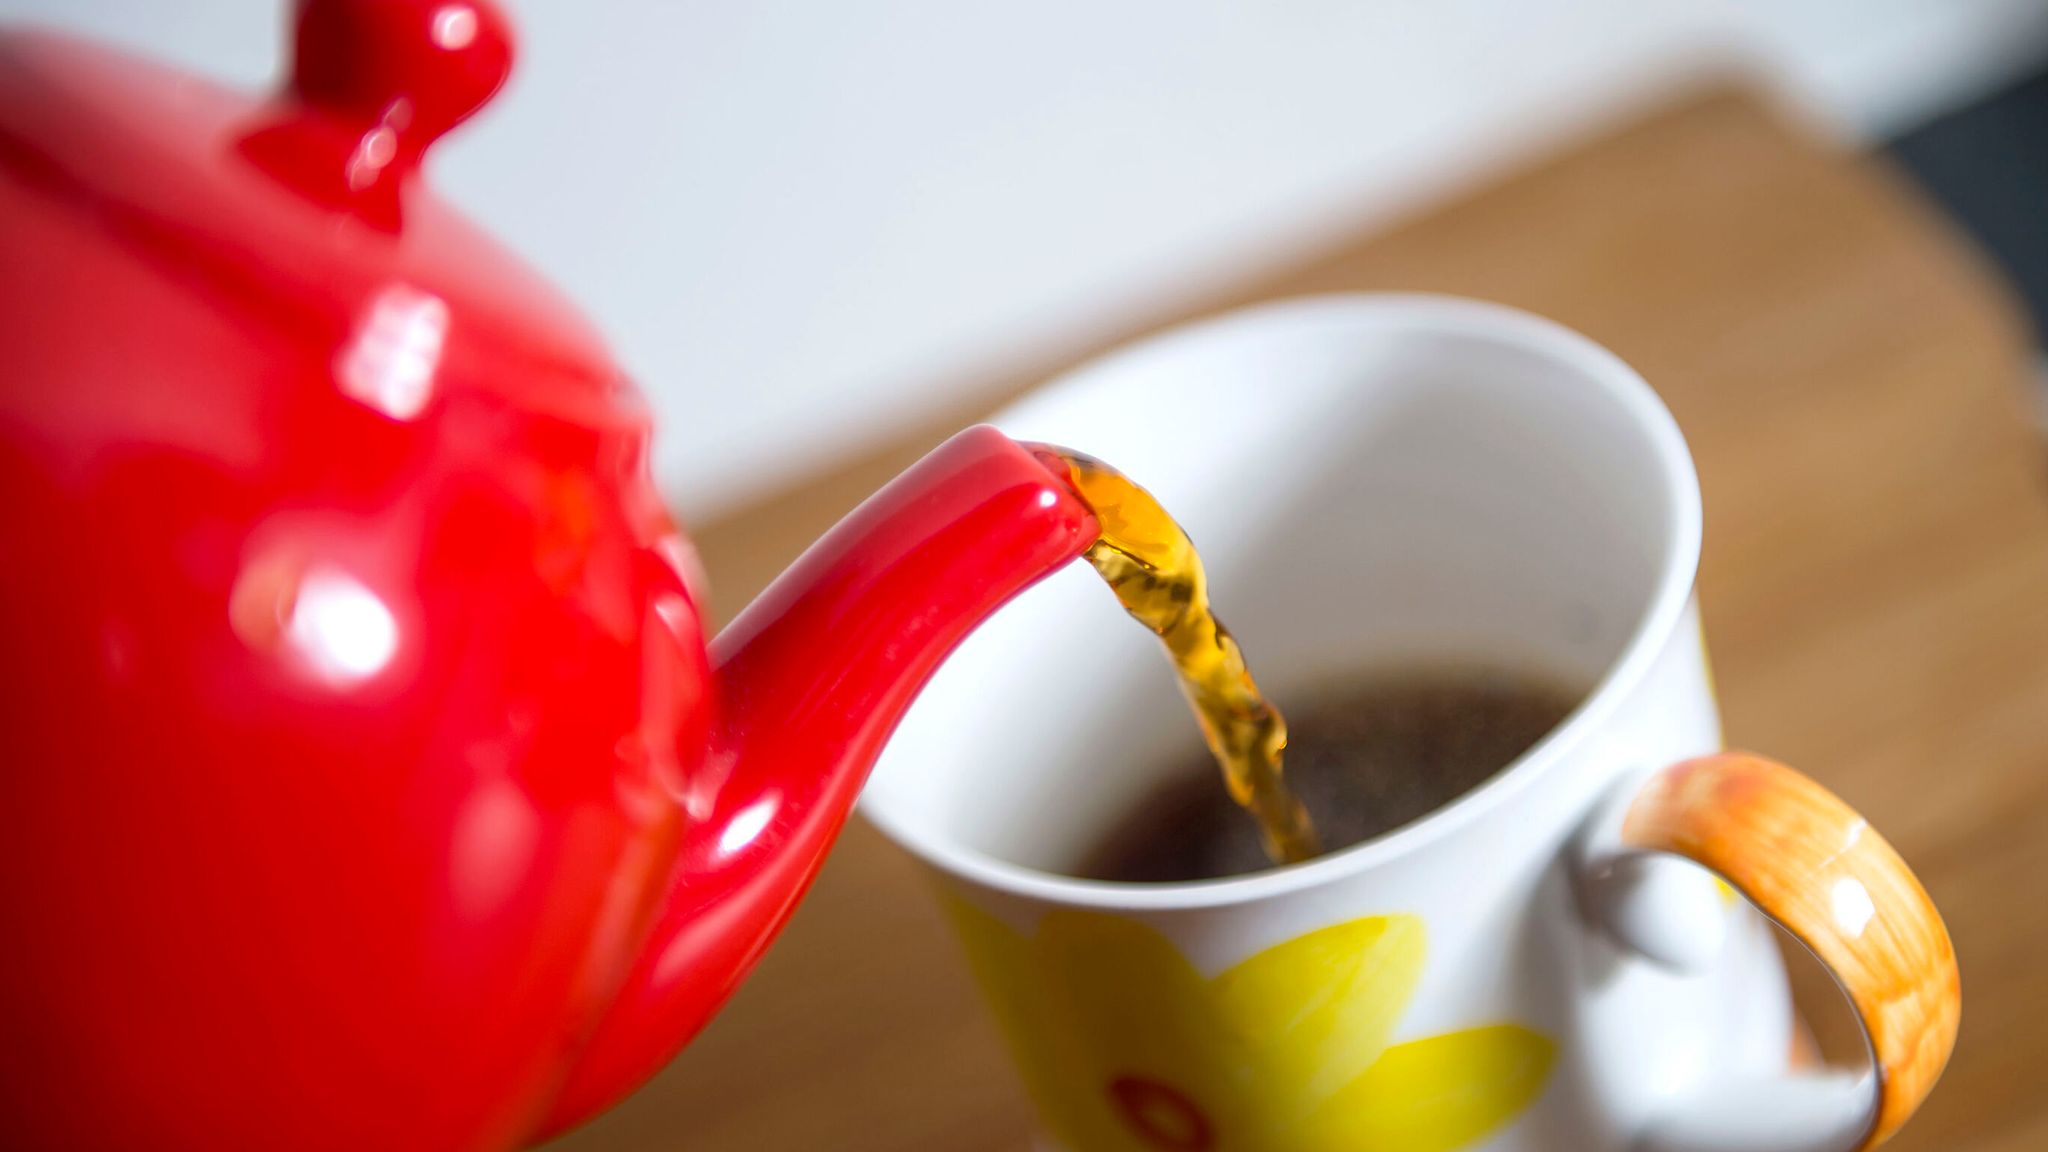 Profesor AS beri saranan tambah garam dalam minuman teh dikecam penduduk UK